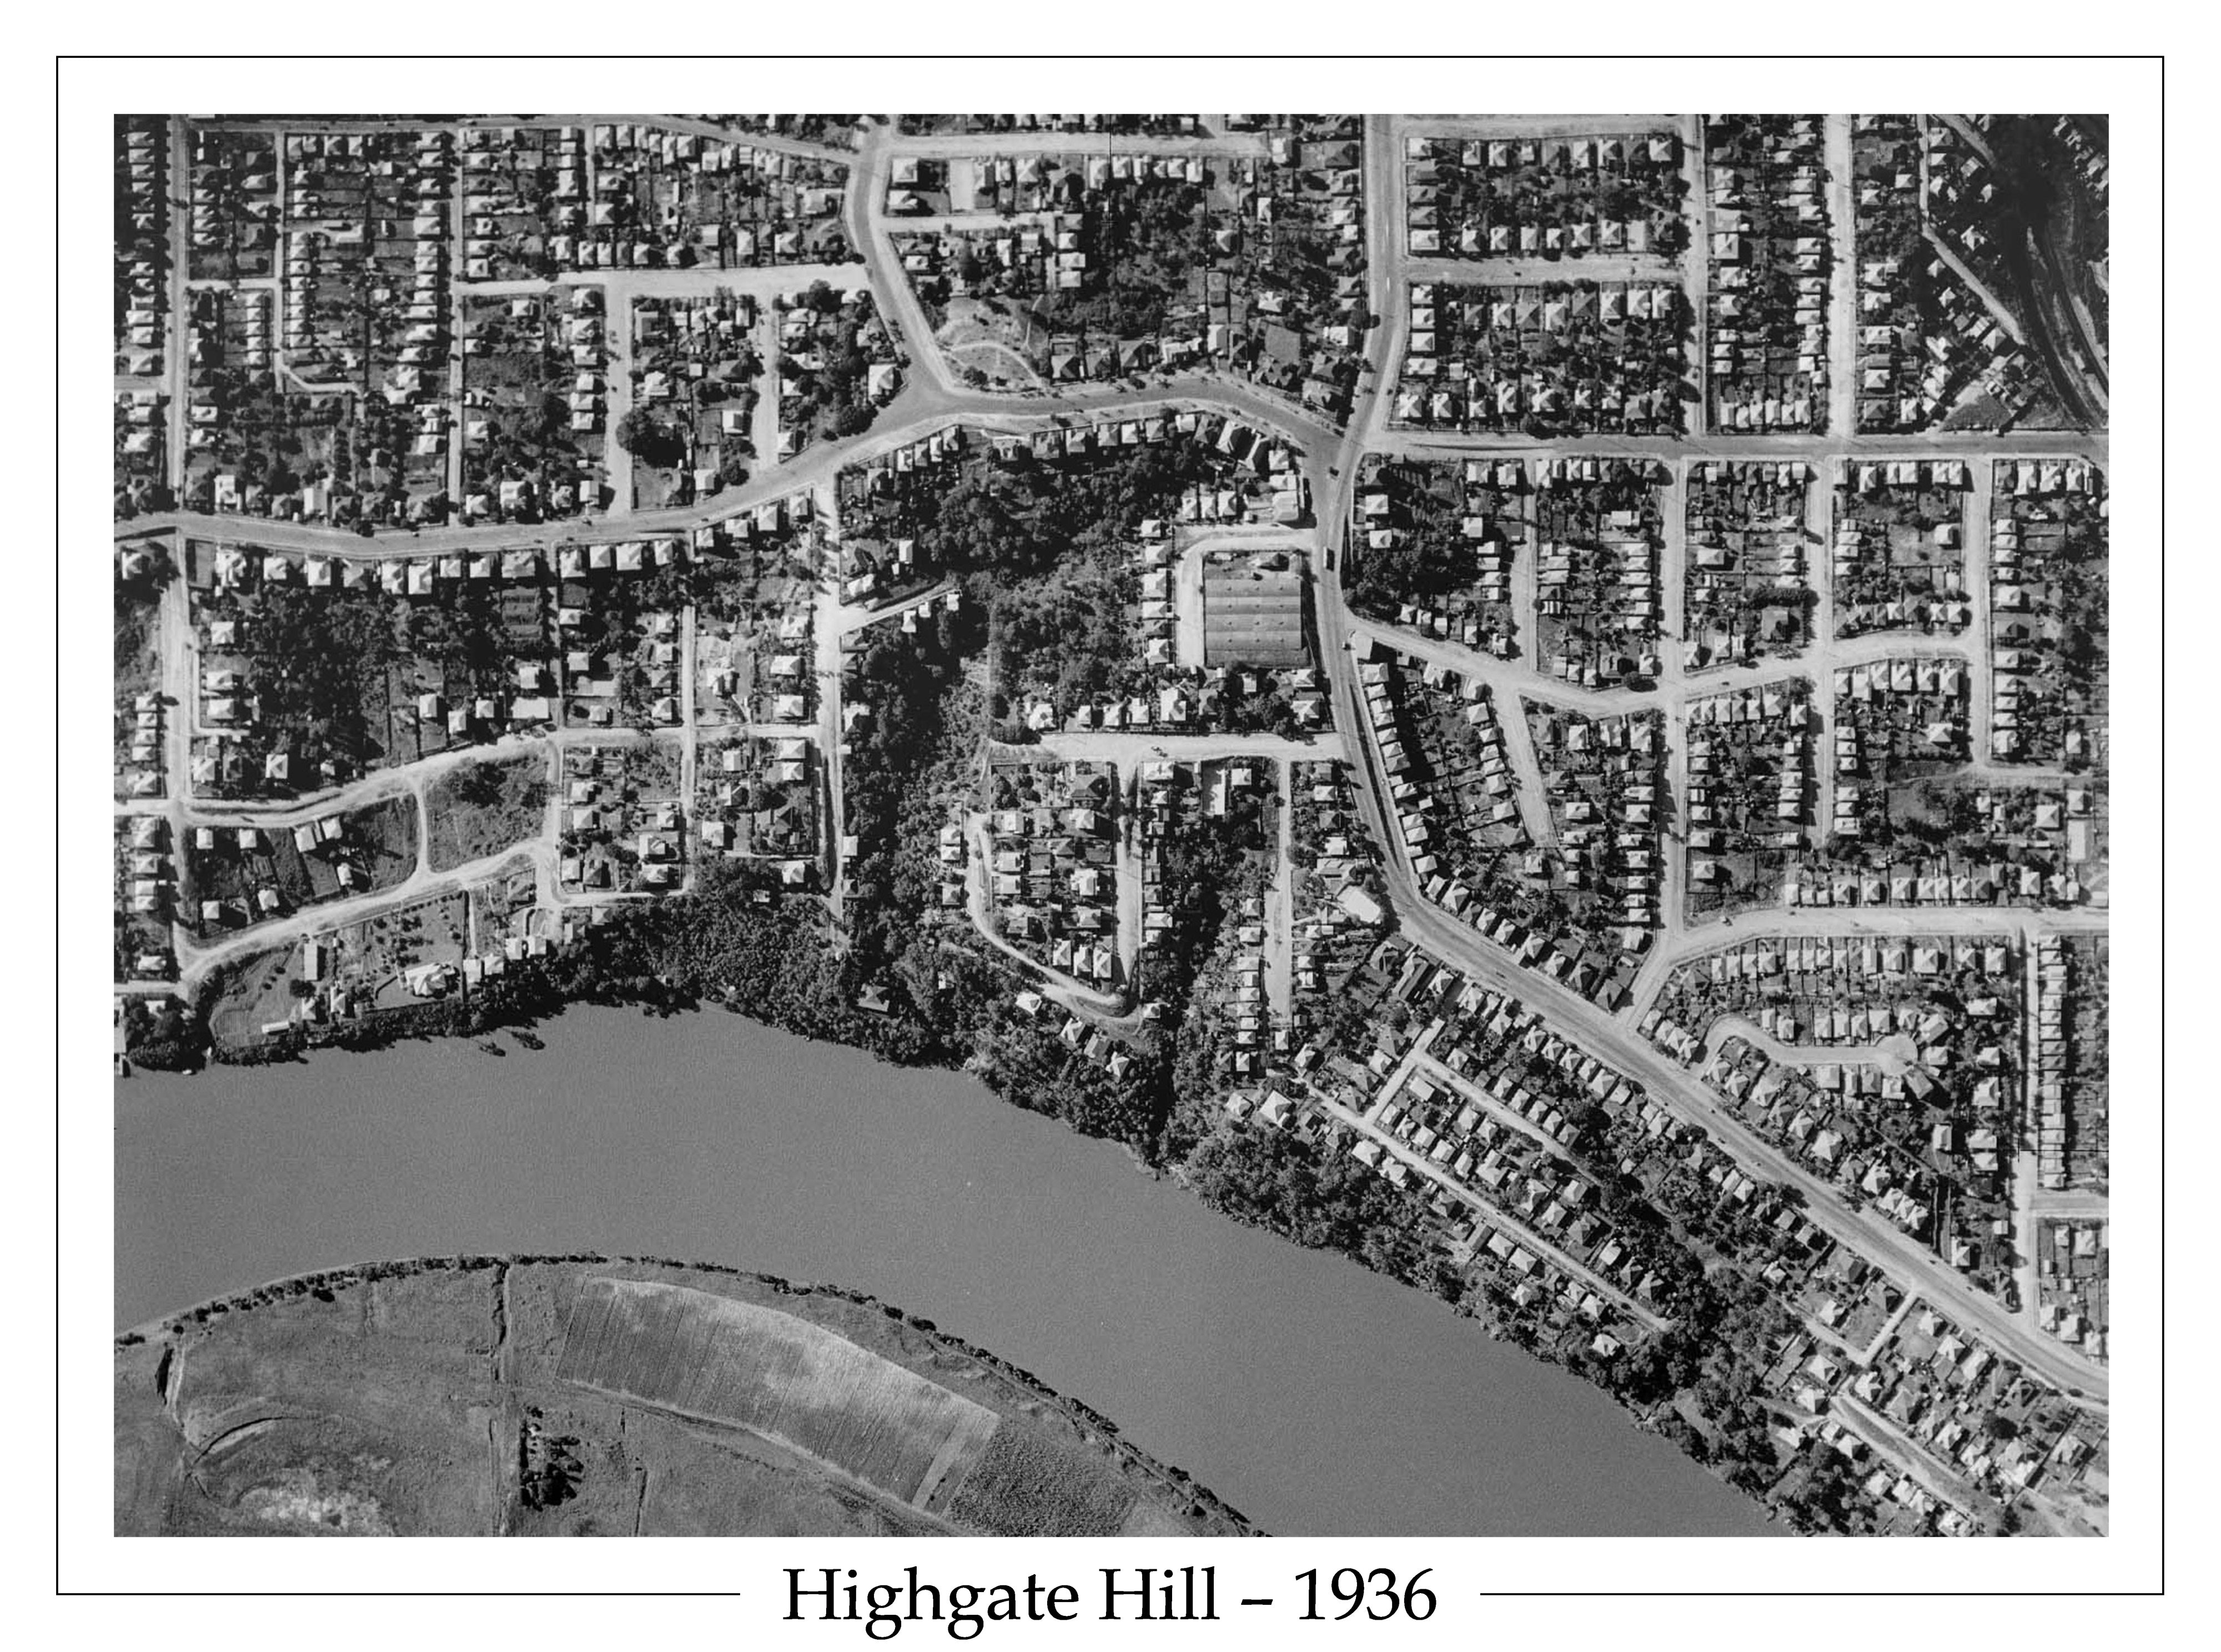 1936 Highgate Hill - Aerial Photo - Dornoch Terrace